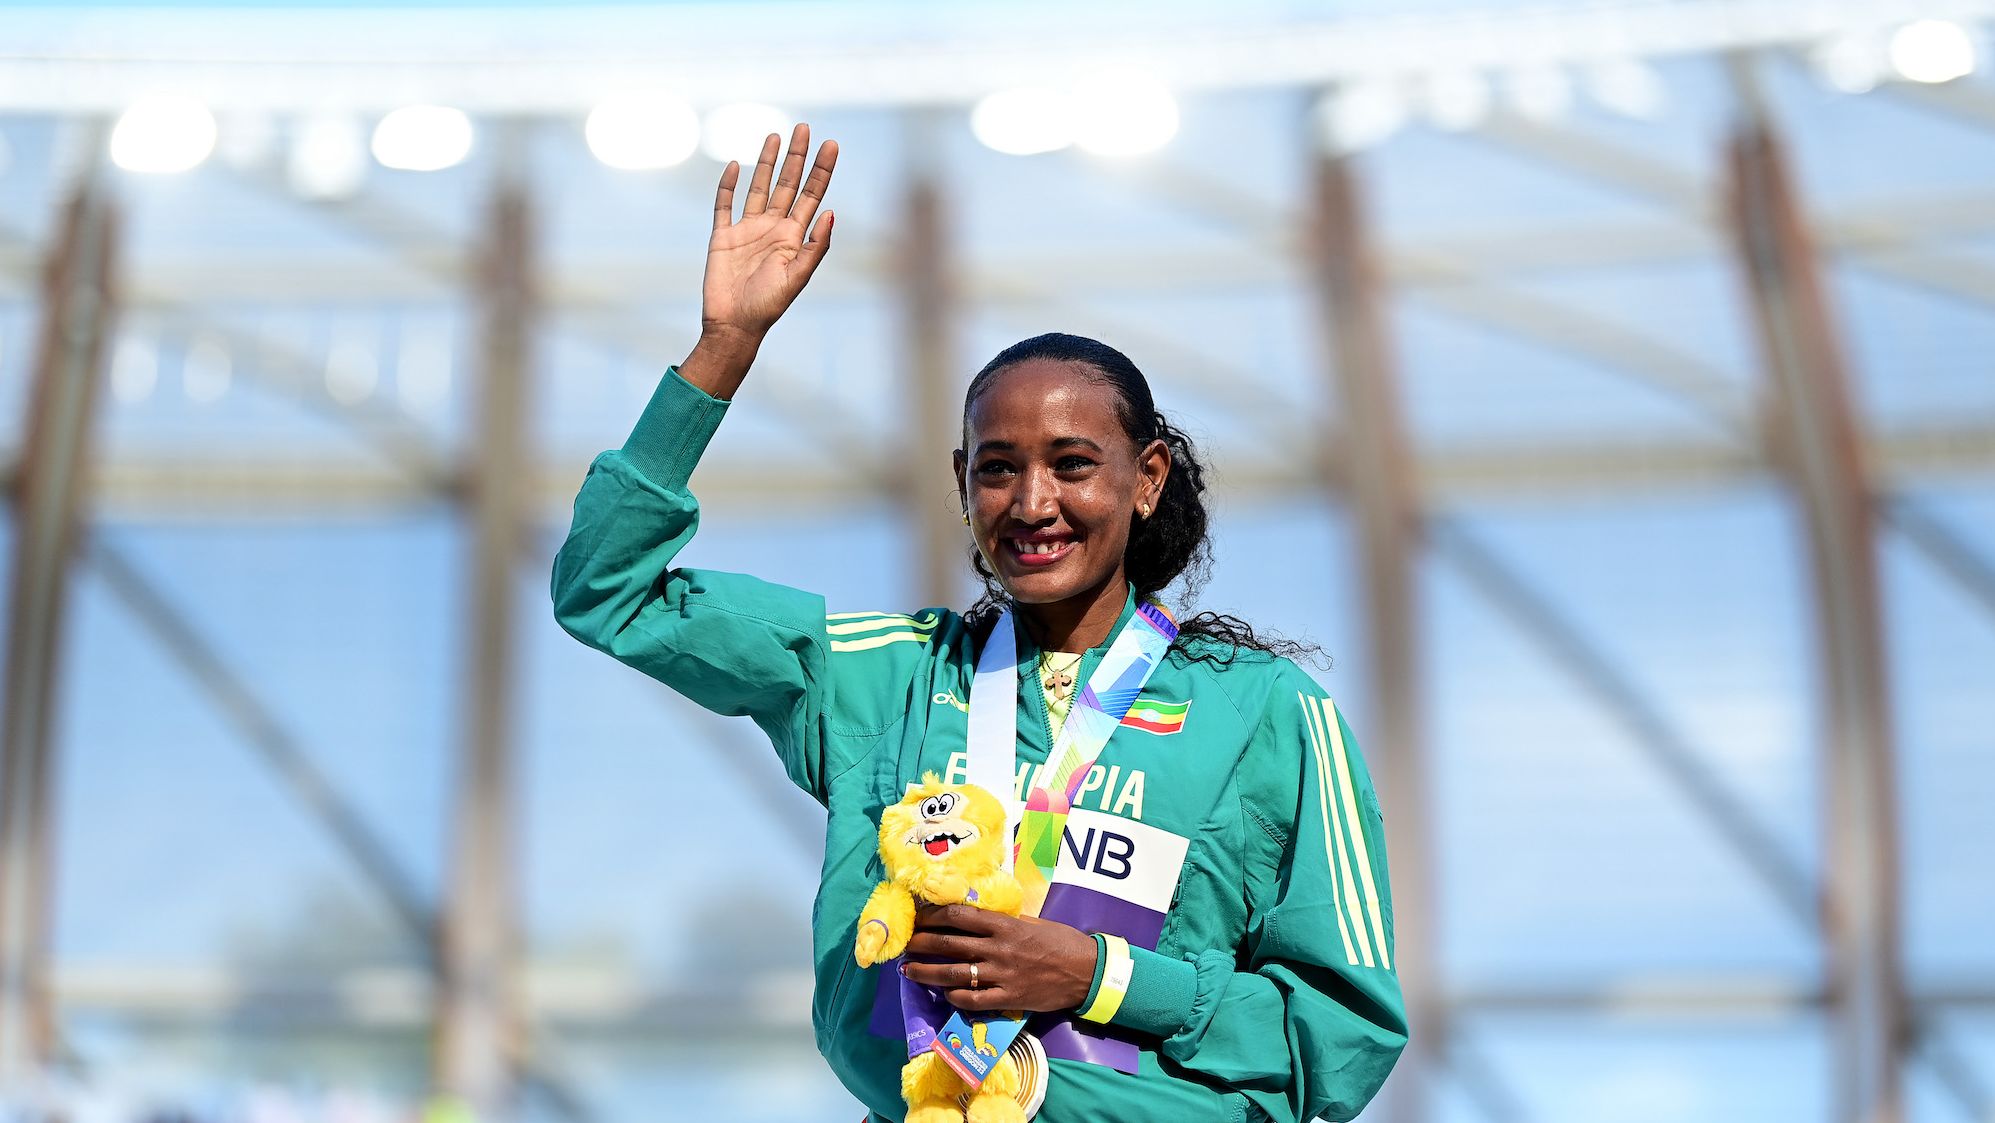 Gebreslase receives her gold medal in the women's marathon at the World Athletics Championships in Eugene, Oregon. 